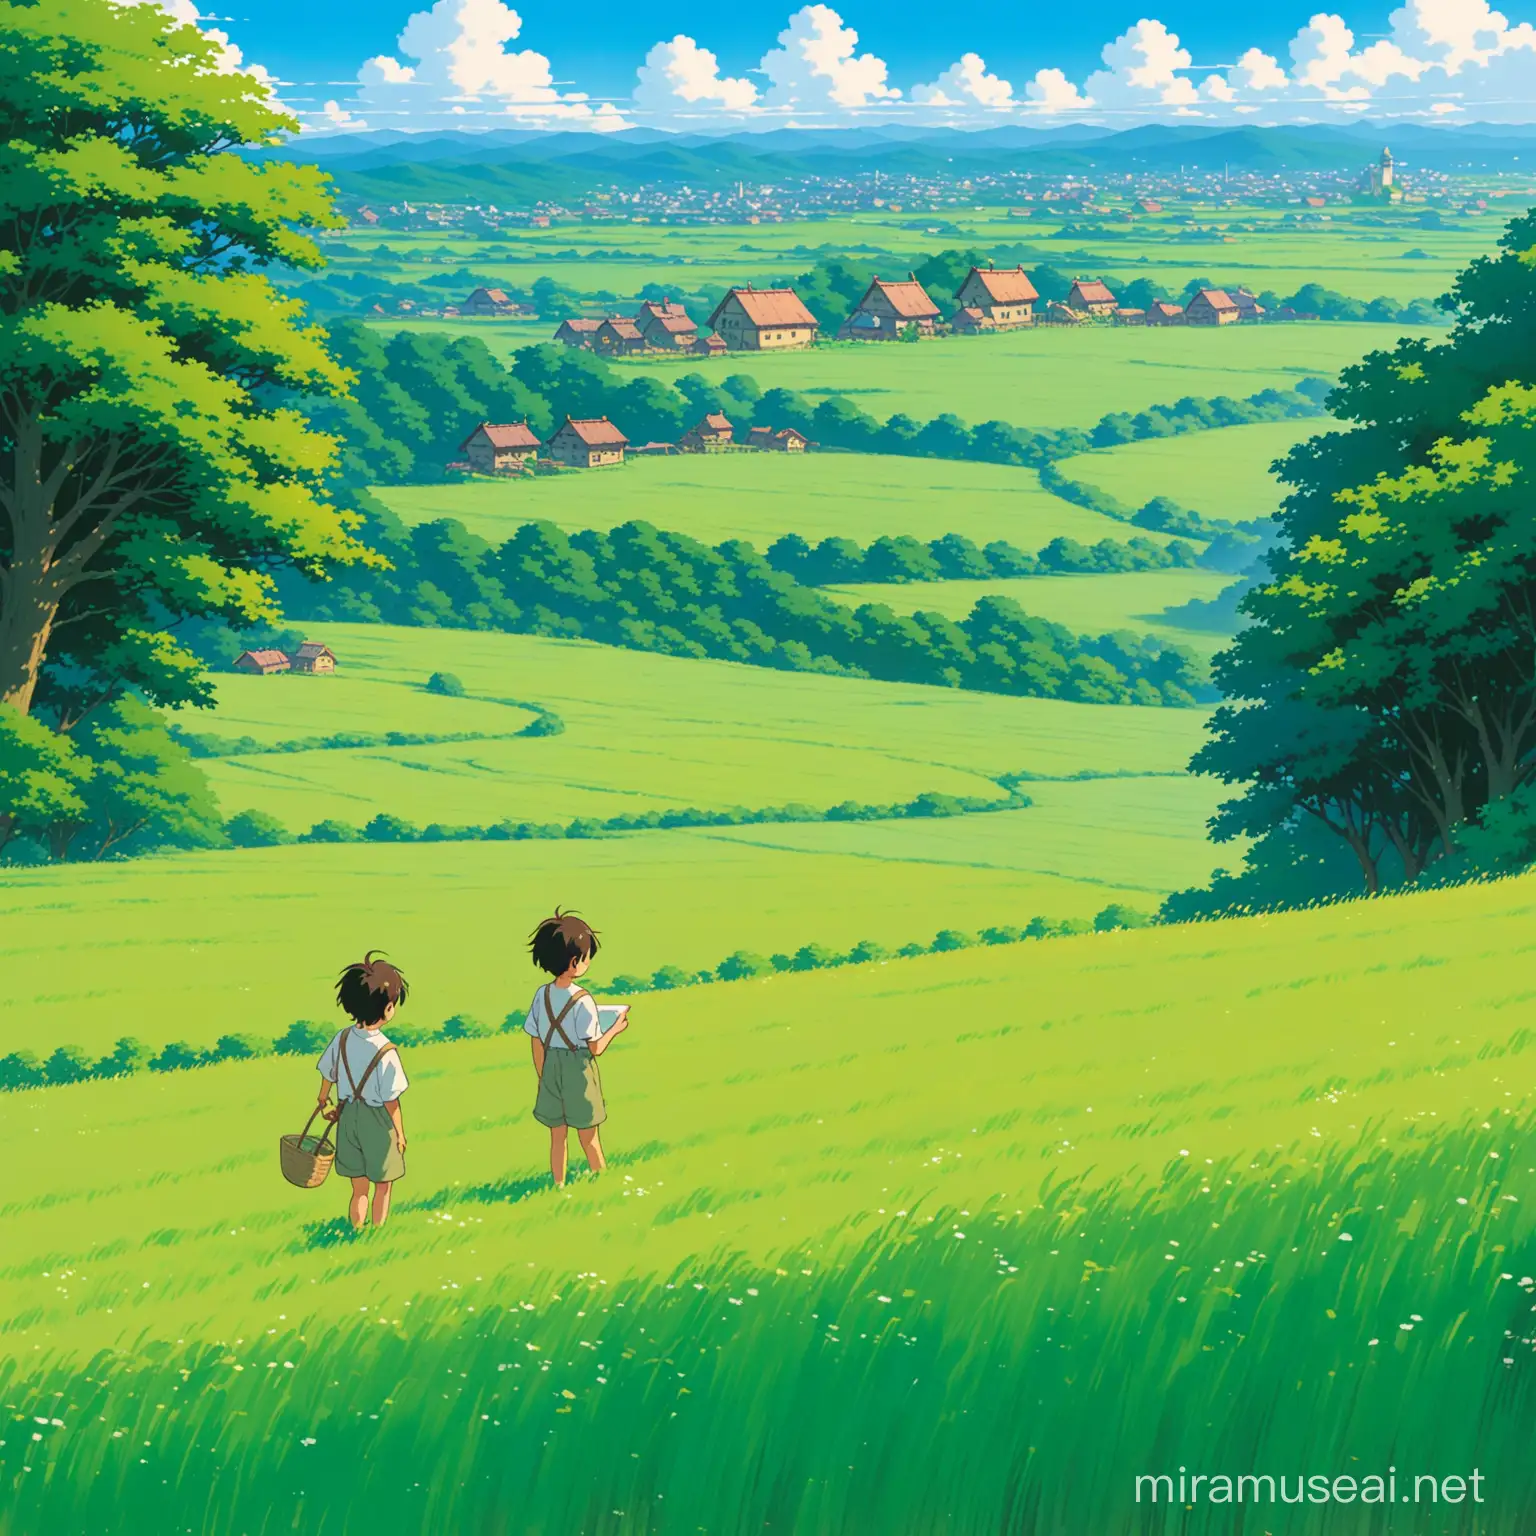 Studio Ghibli Inspired Children Playing in Peaceful Daylight Fields